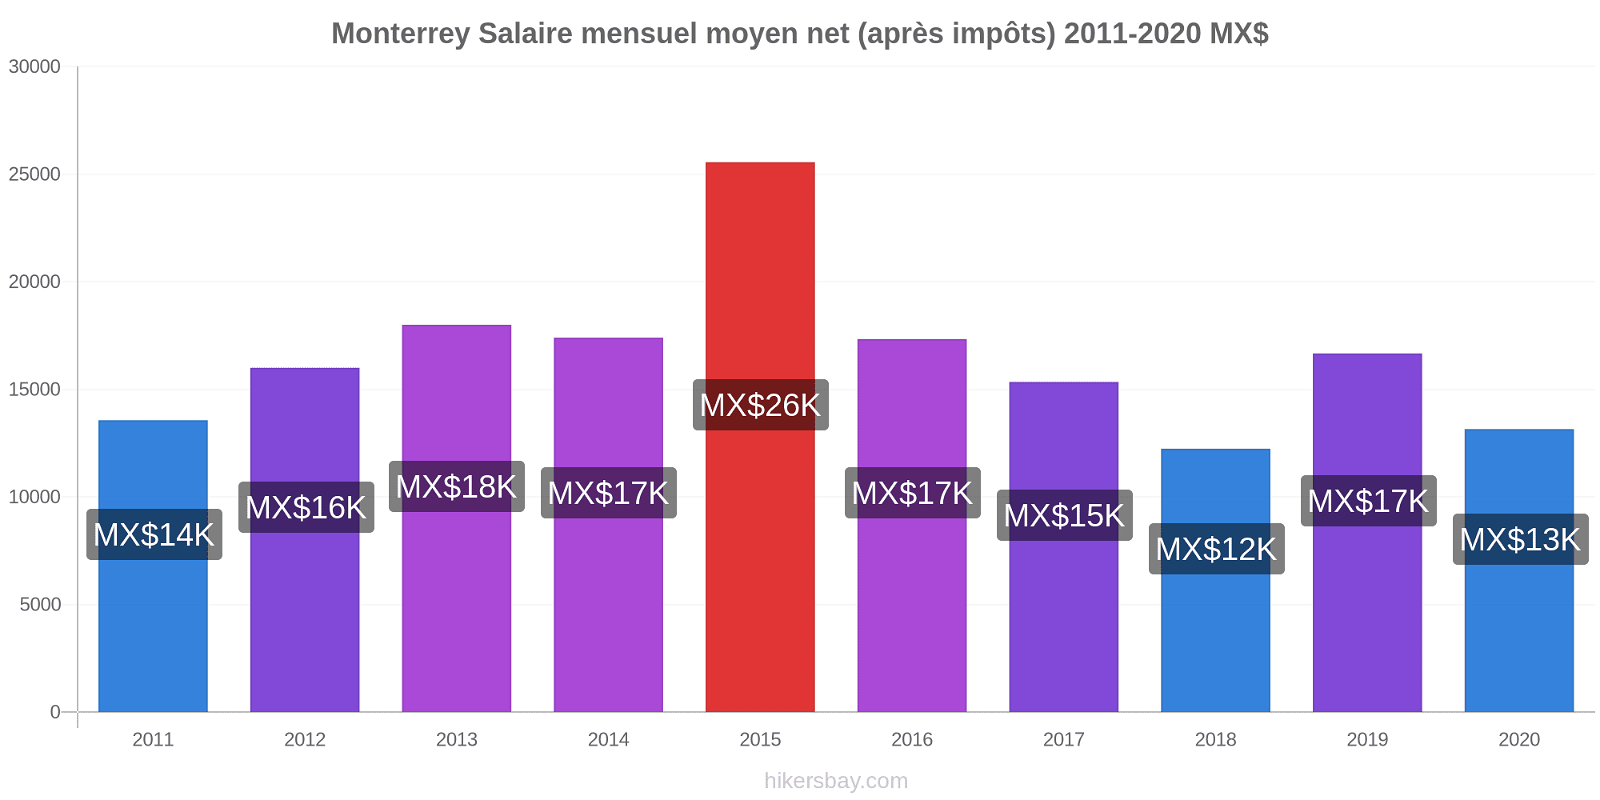 Monterrey changements de prix Salaire mensuel Net (après impôts) hikersbay.com